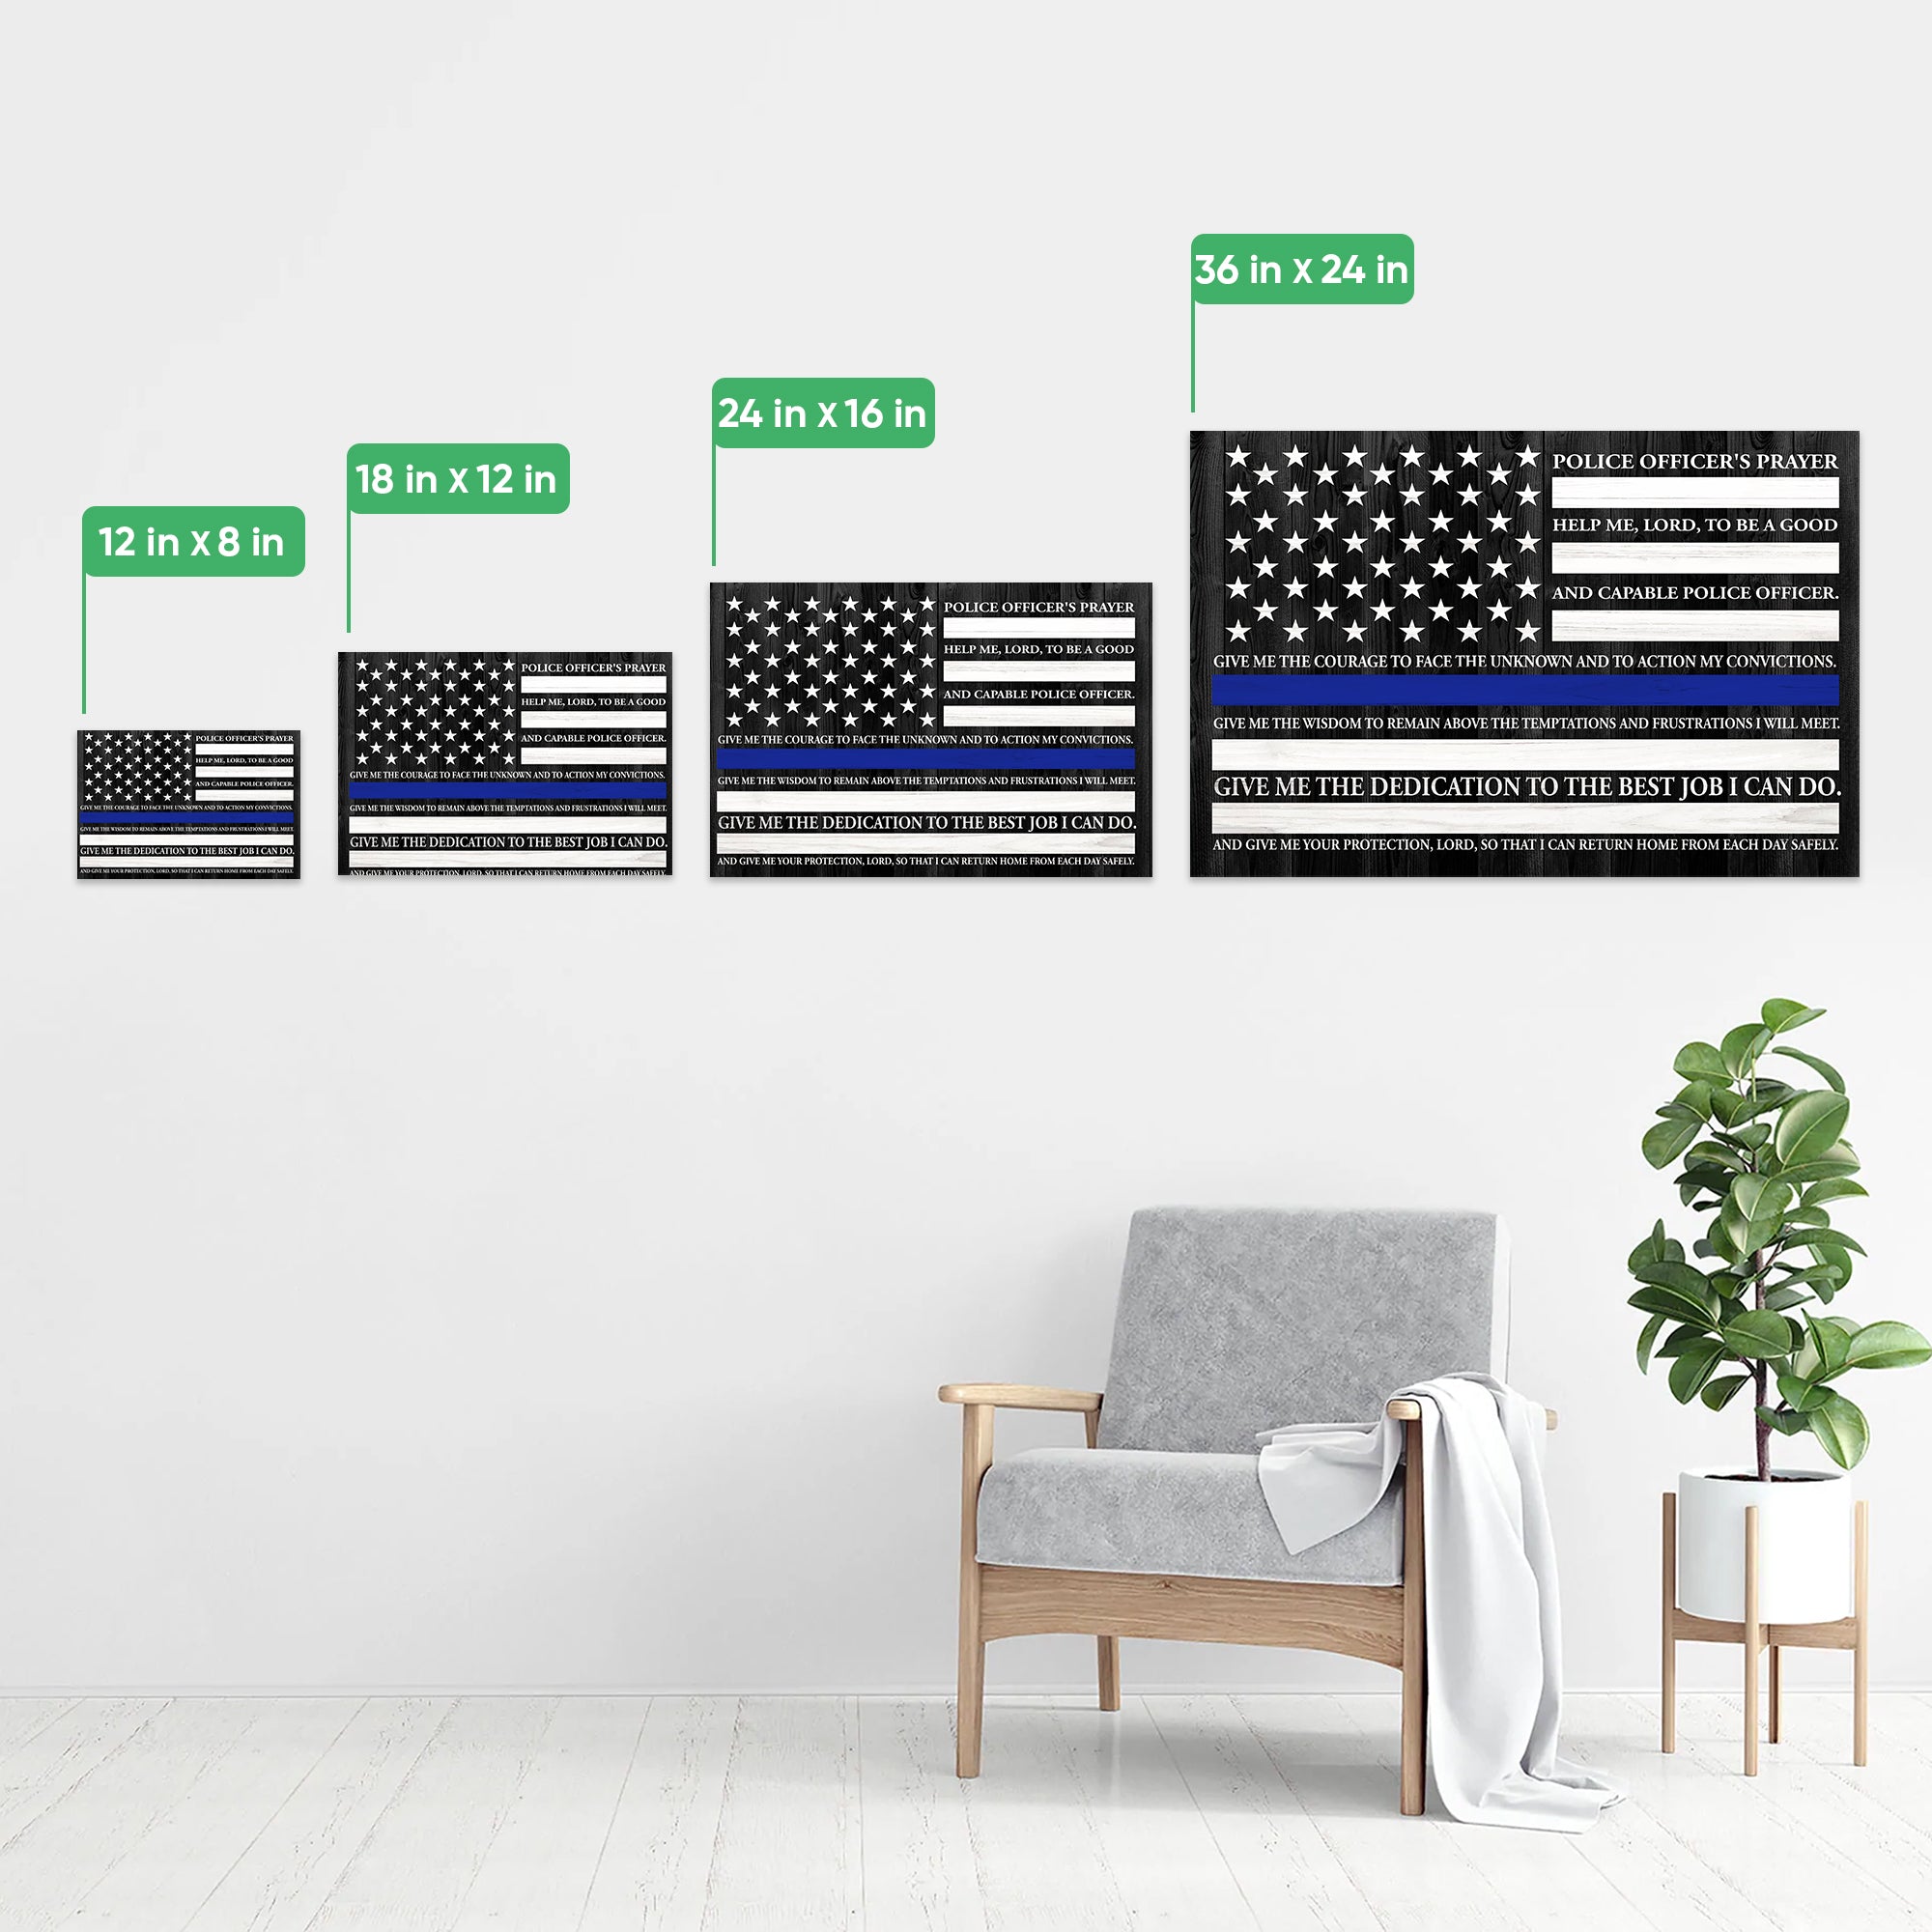 police officer prayer wallpaper